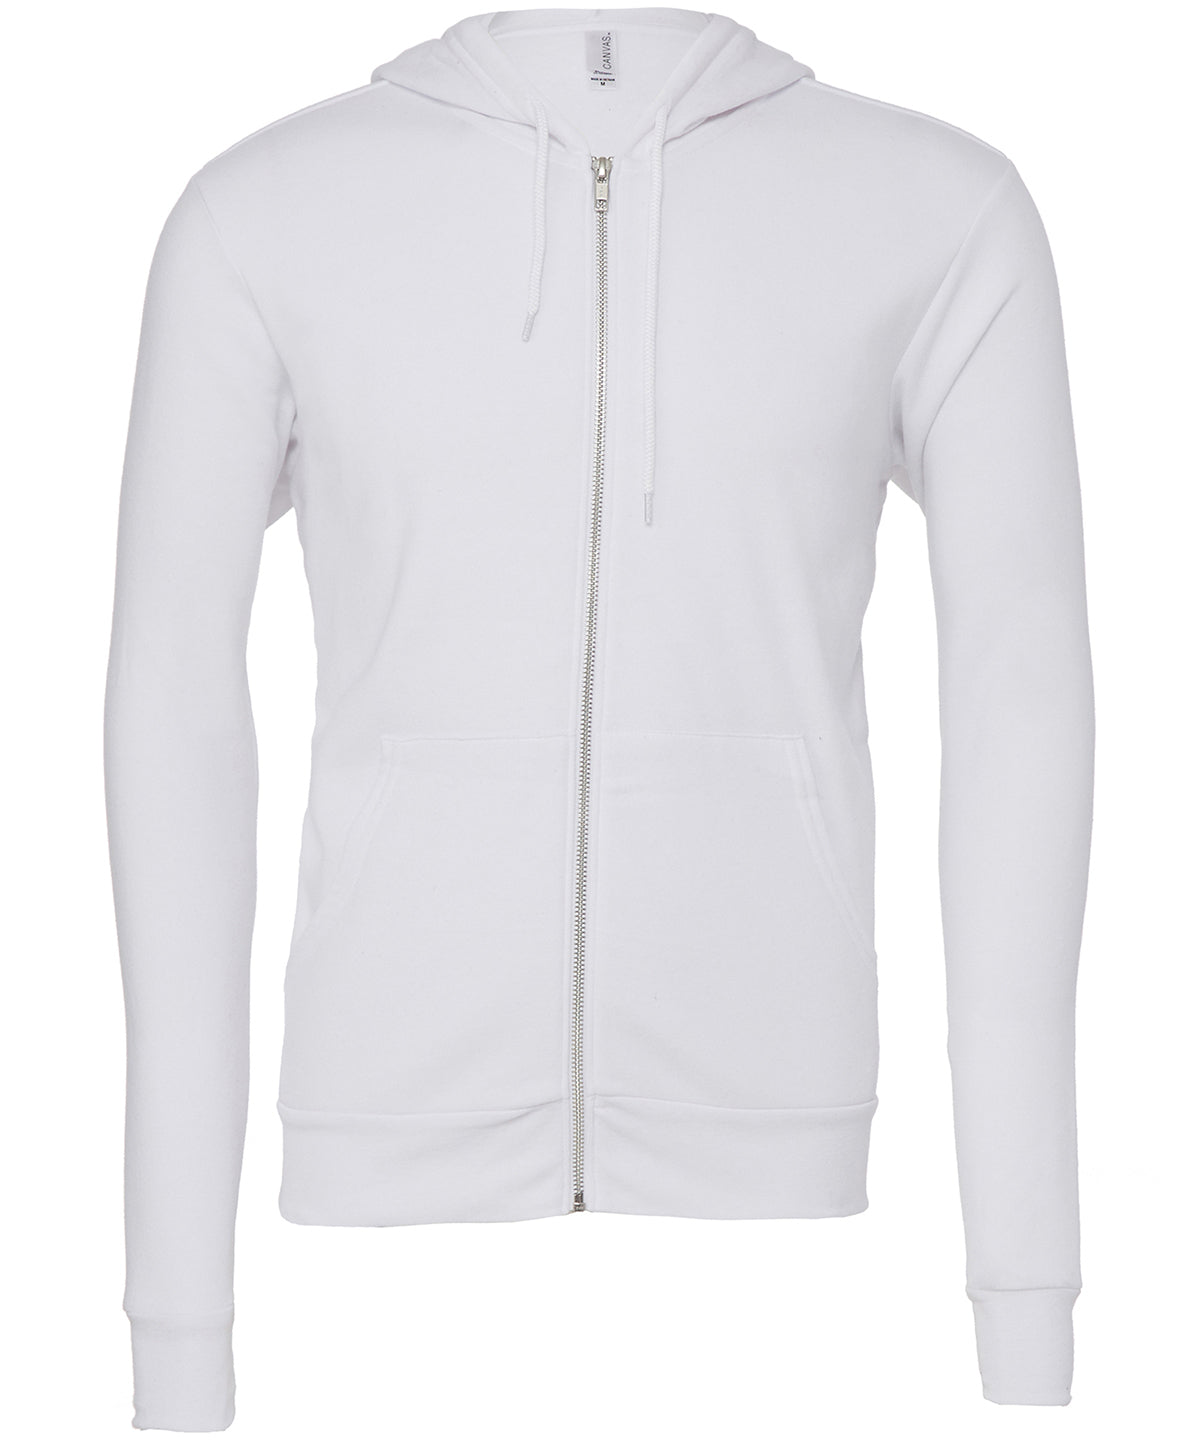 Bella Canvas Unisex polycotton fleece full-zip hoodie White